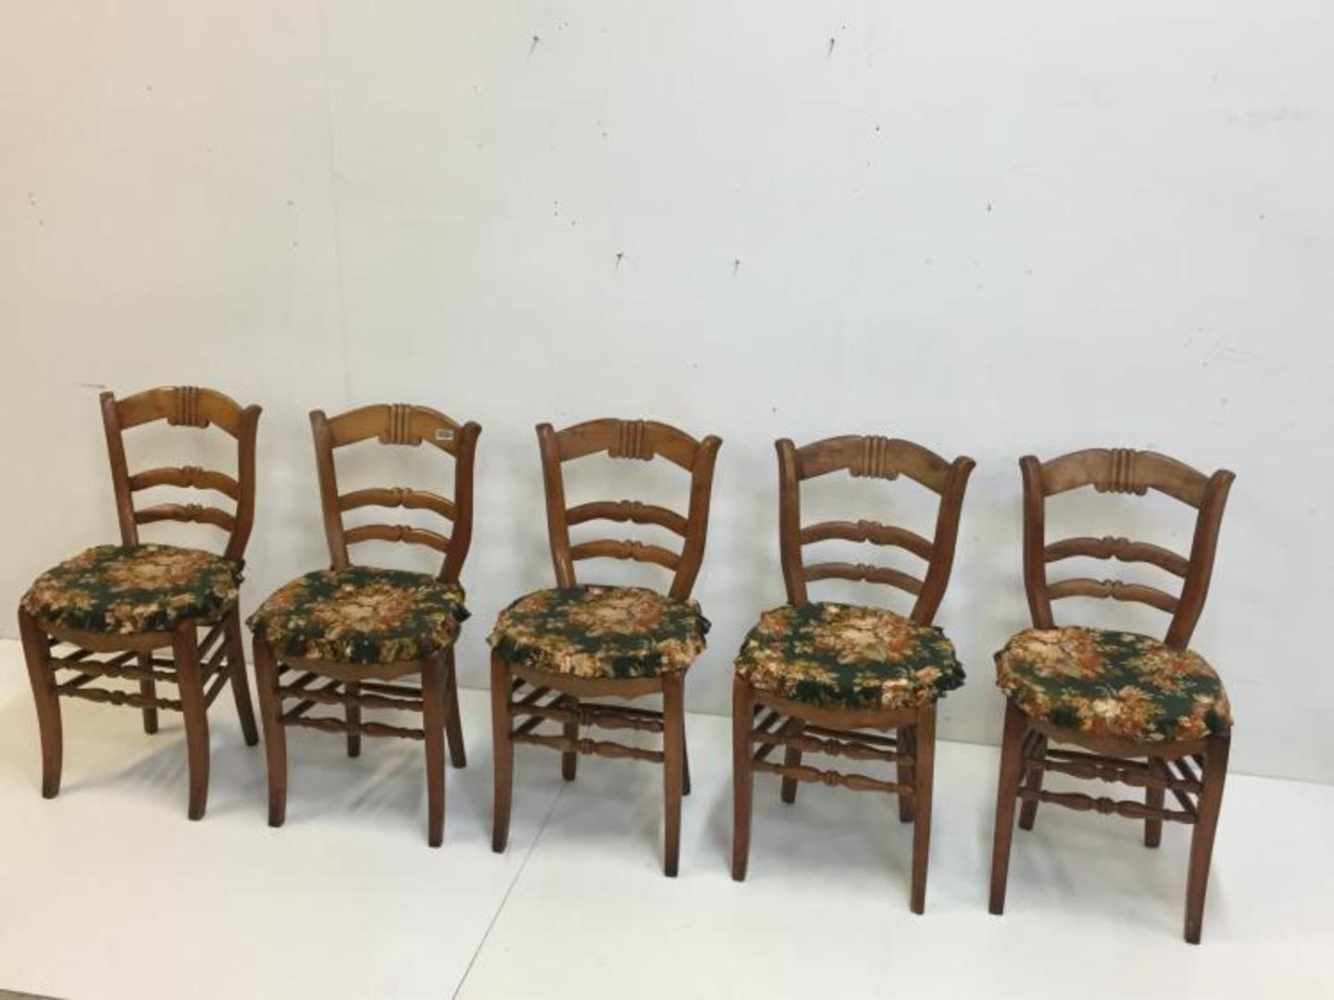 5 Biedemeyer stoelen